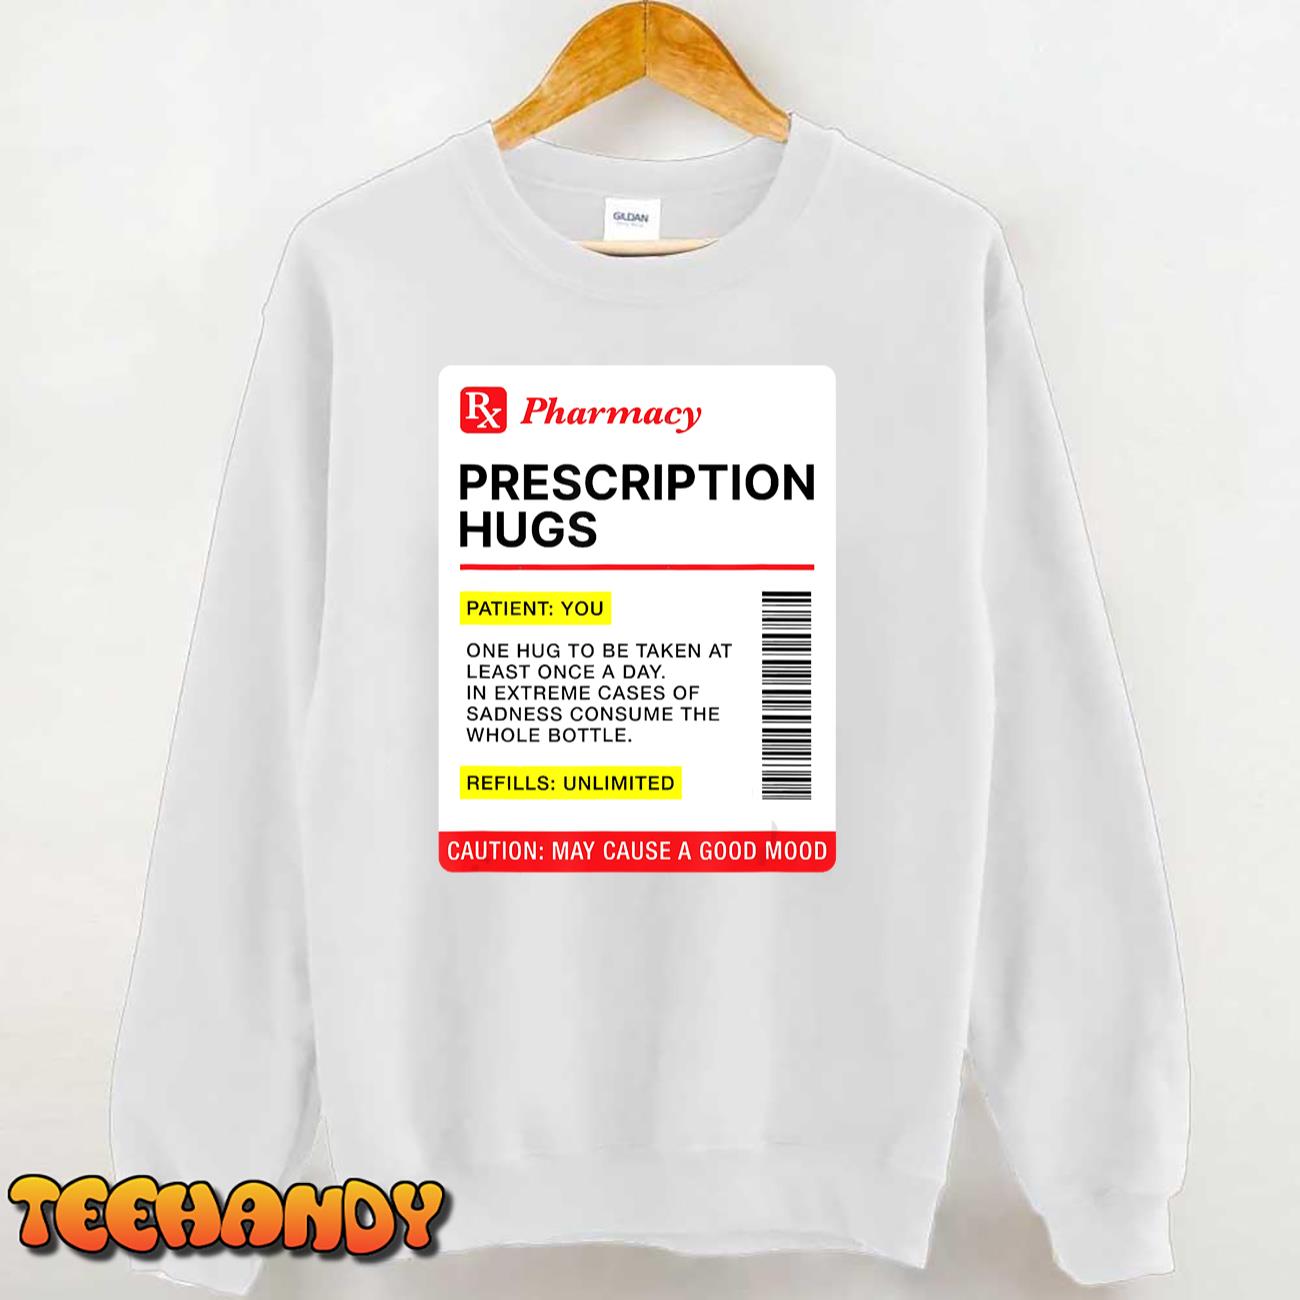 Prescription Hugs – Funny Label Lazy Halloween Costume Party T-Shirt